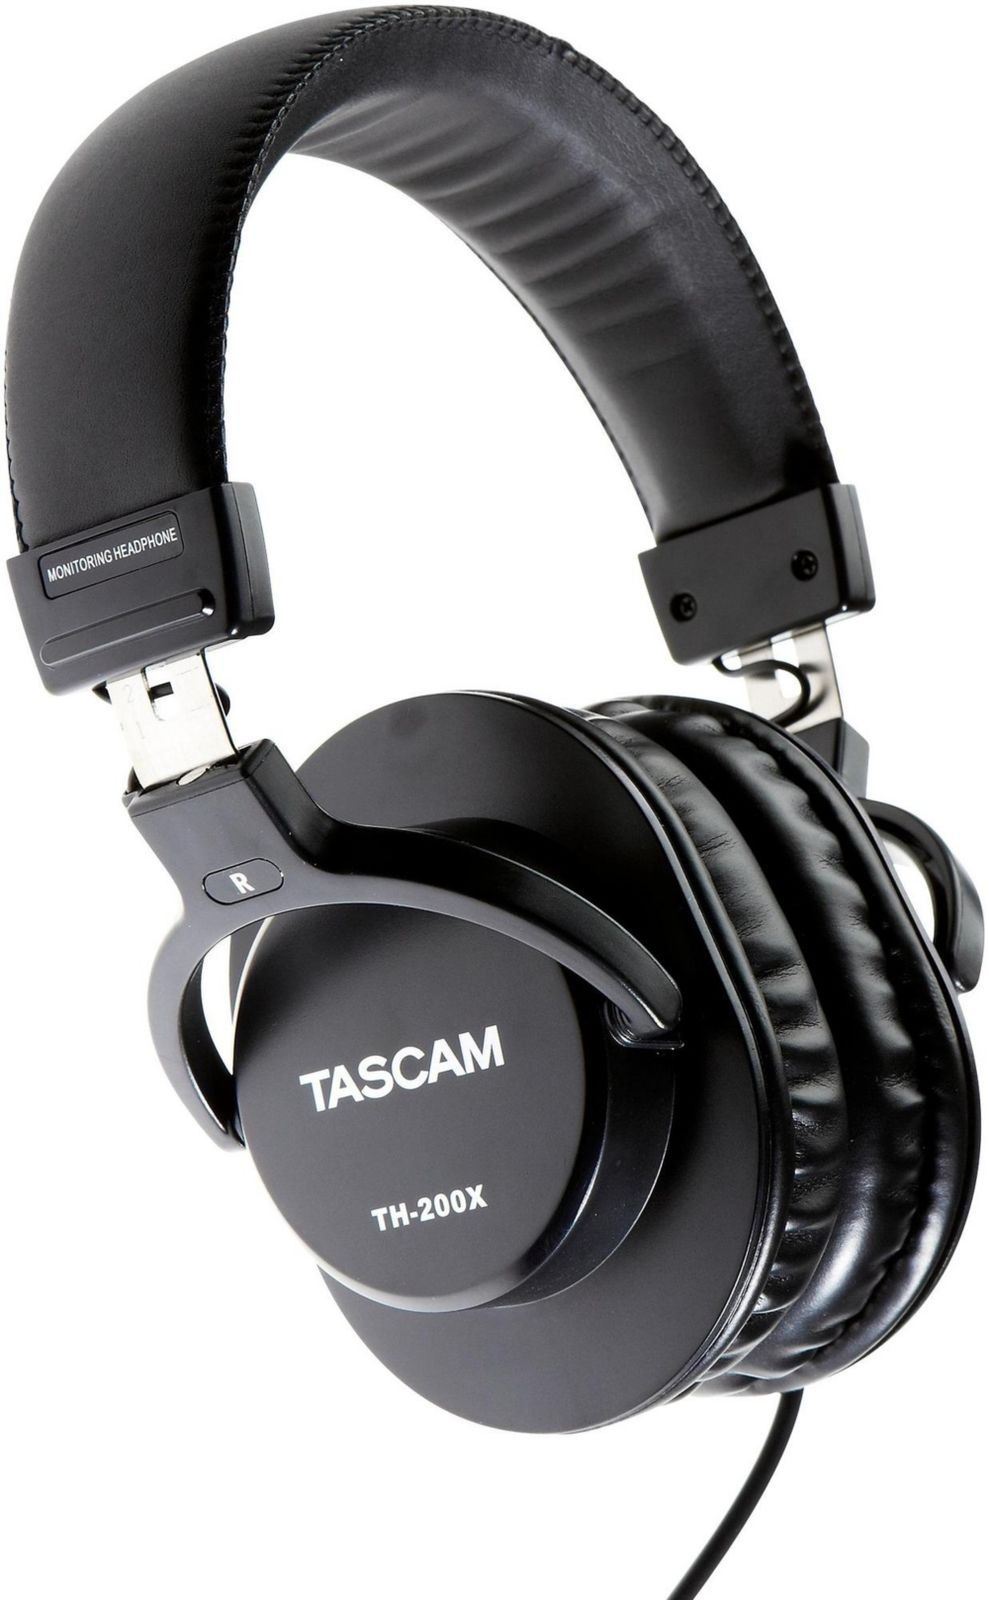 Tascam TH-200X studio headphones for $30